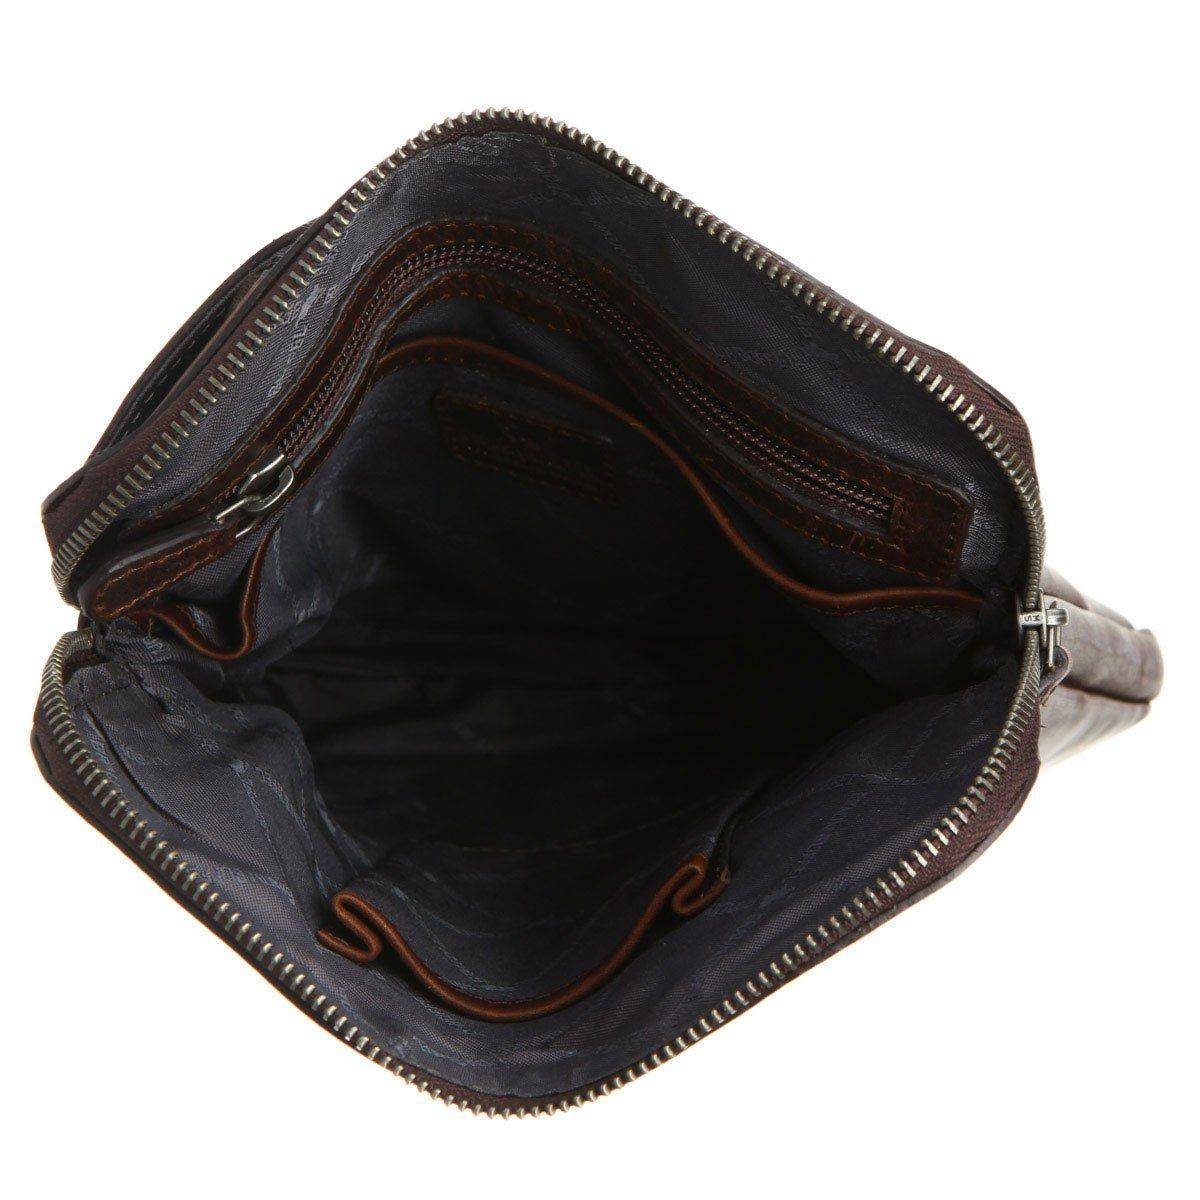 Сумка репортер Braun Buffel PARMA Shoulder Bag M 75362, цвет коричневый, размер ONE SIZE - фото 5